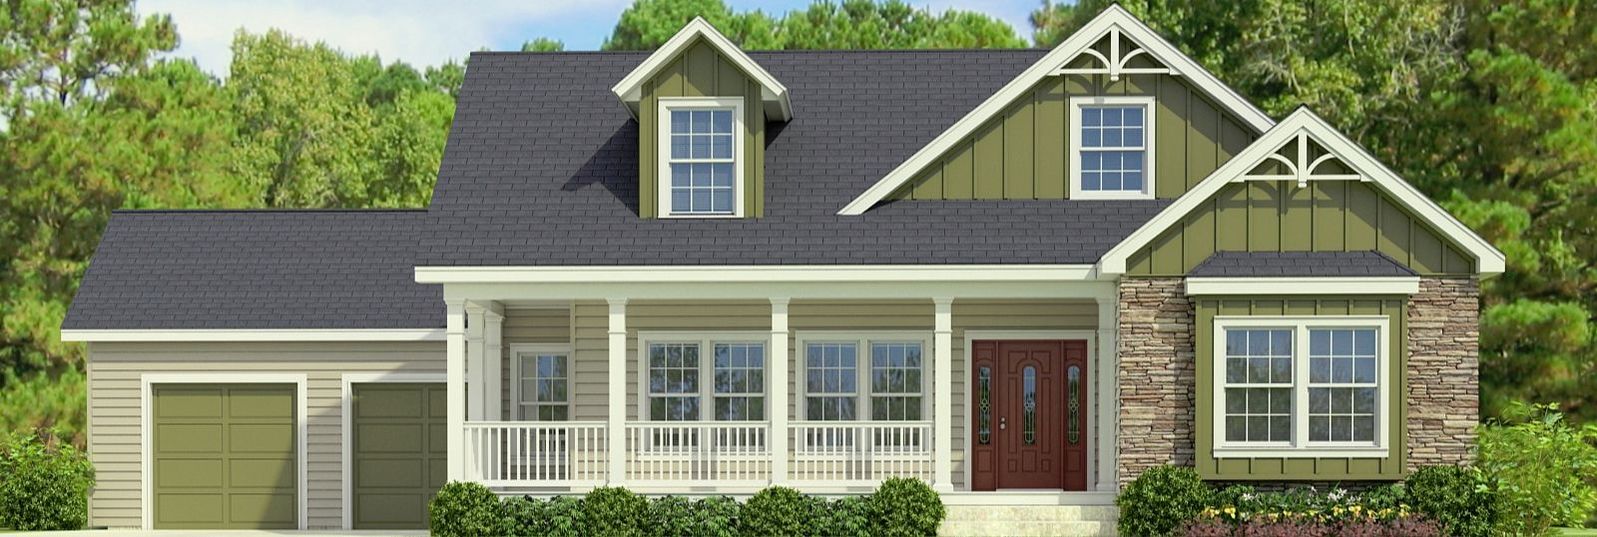 The Buckeye II Cape Cod Style Modular Home has a Trademark Wrap Porch and More - Lincolnton, NC